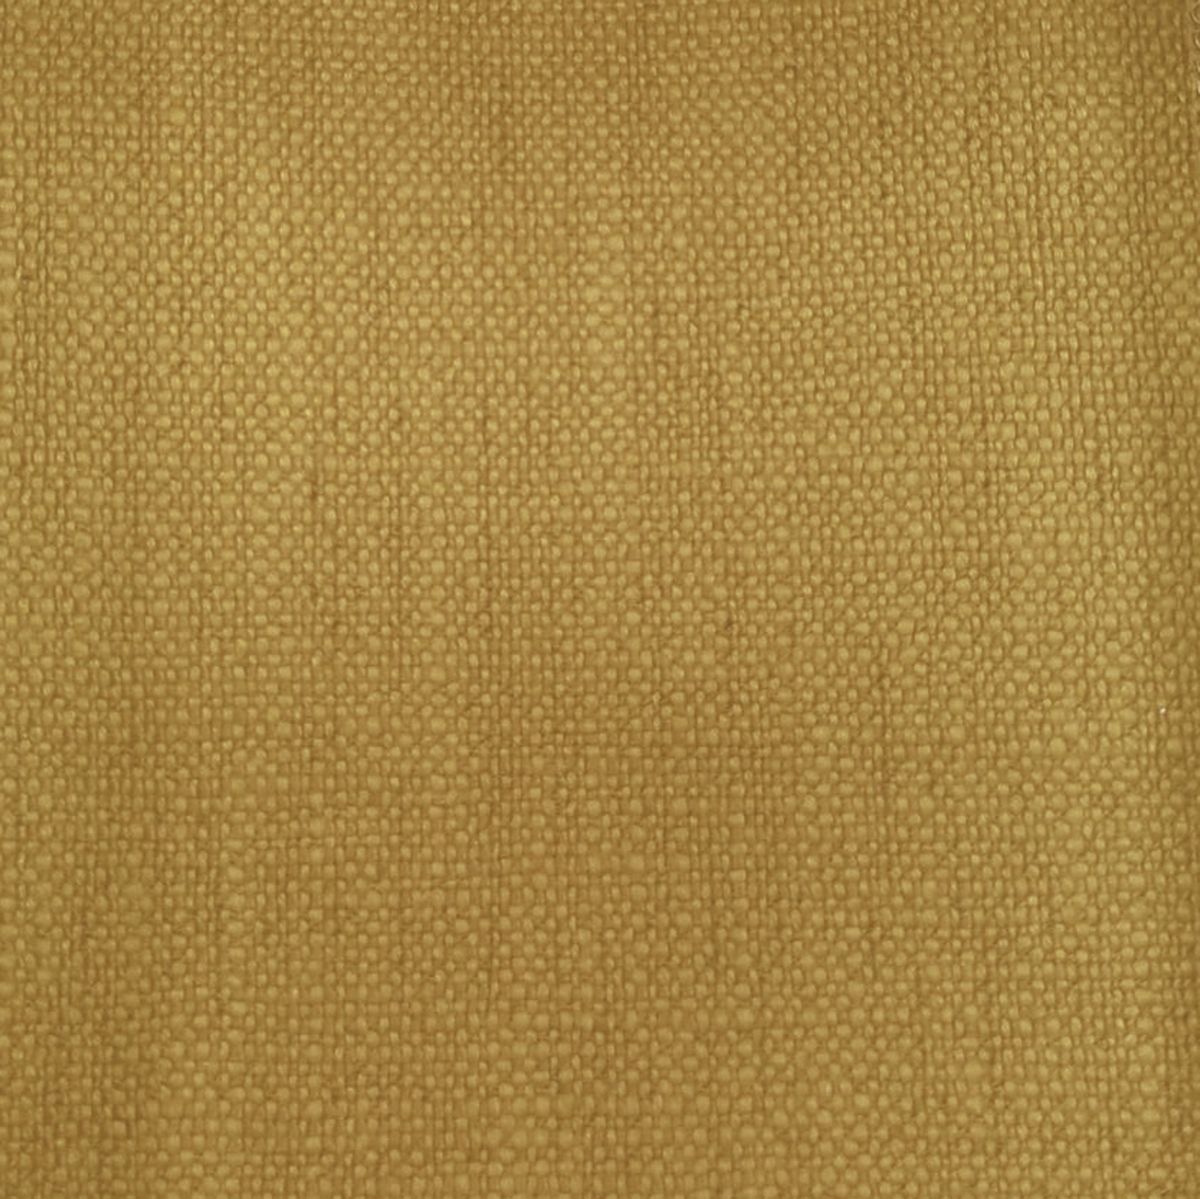 Trento Mustard Fabric by Voyage Maison